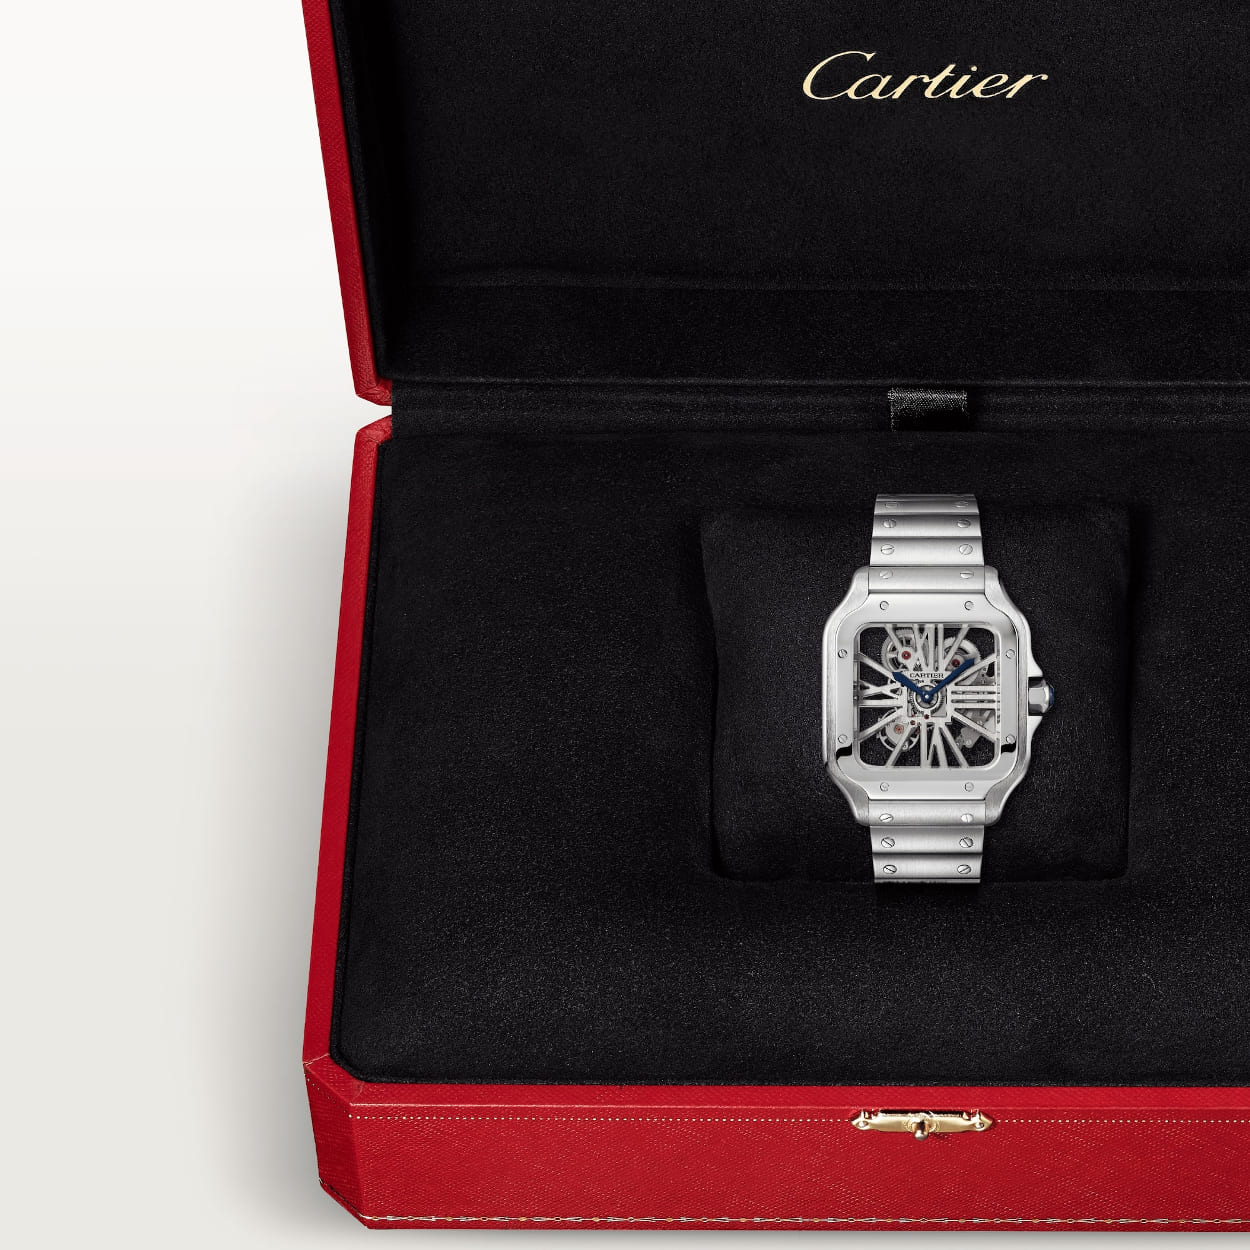 Santos de Cartier Modell WHSA0015 in Cartier Verpackung